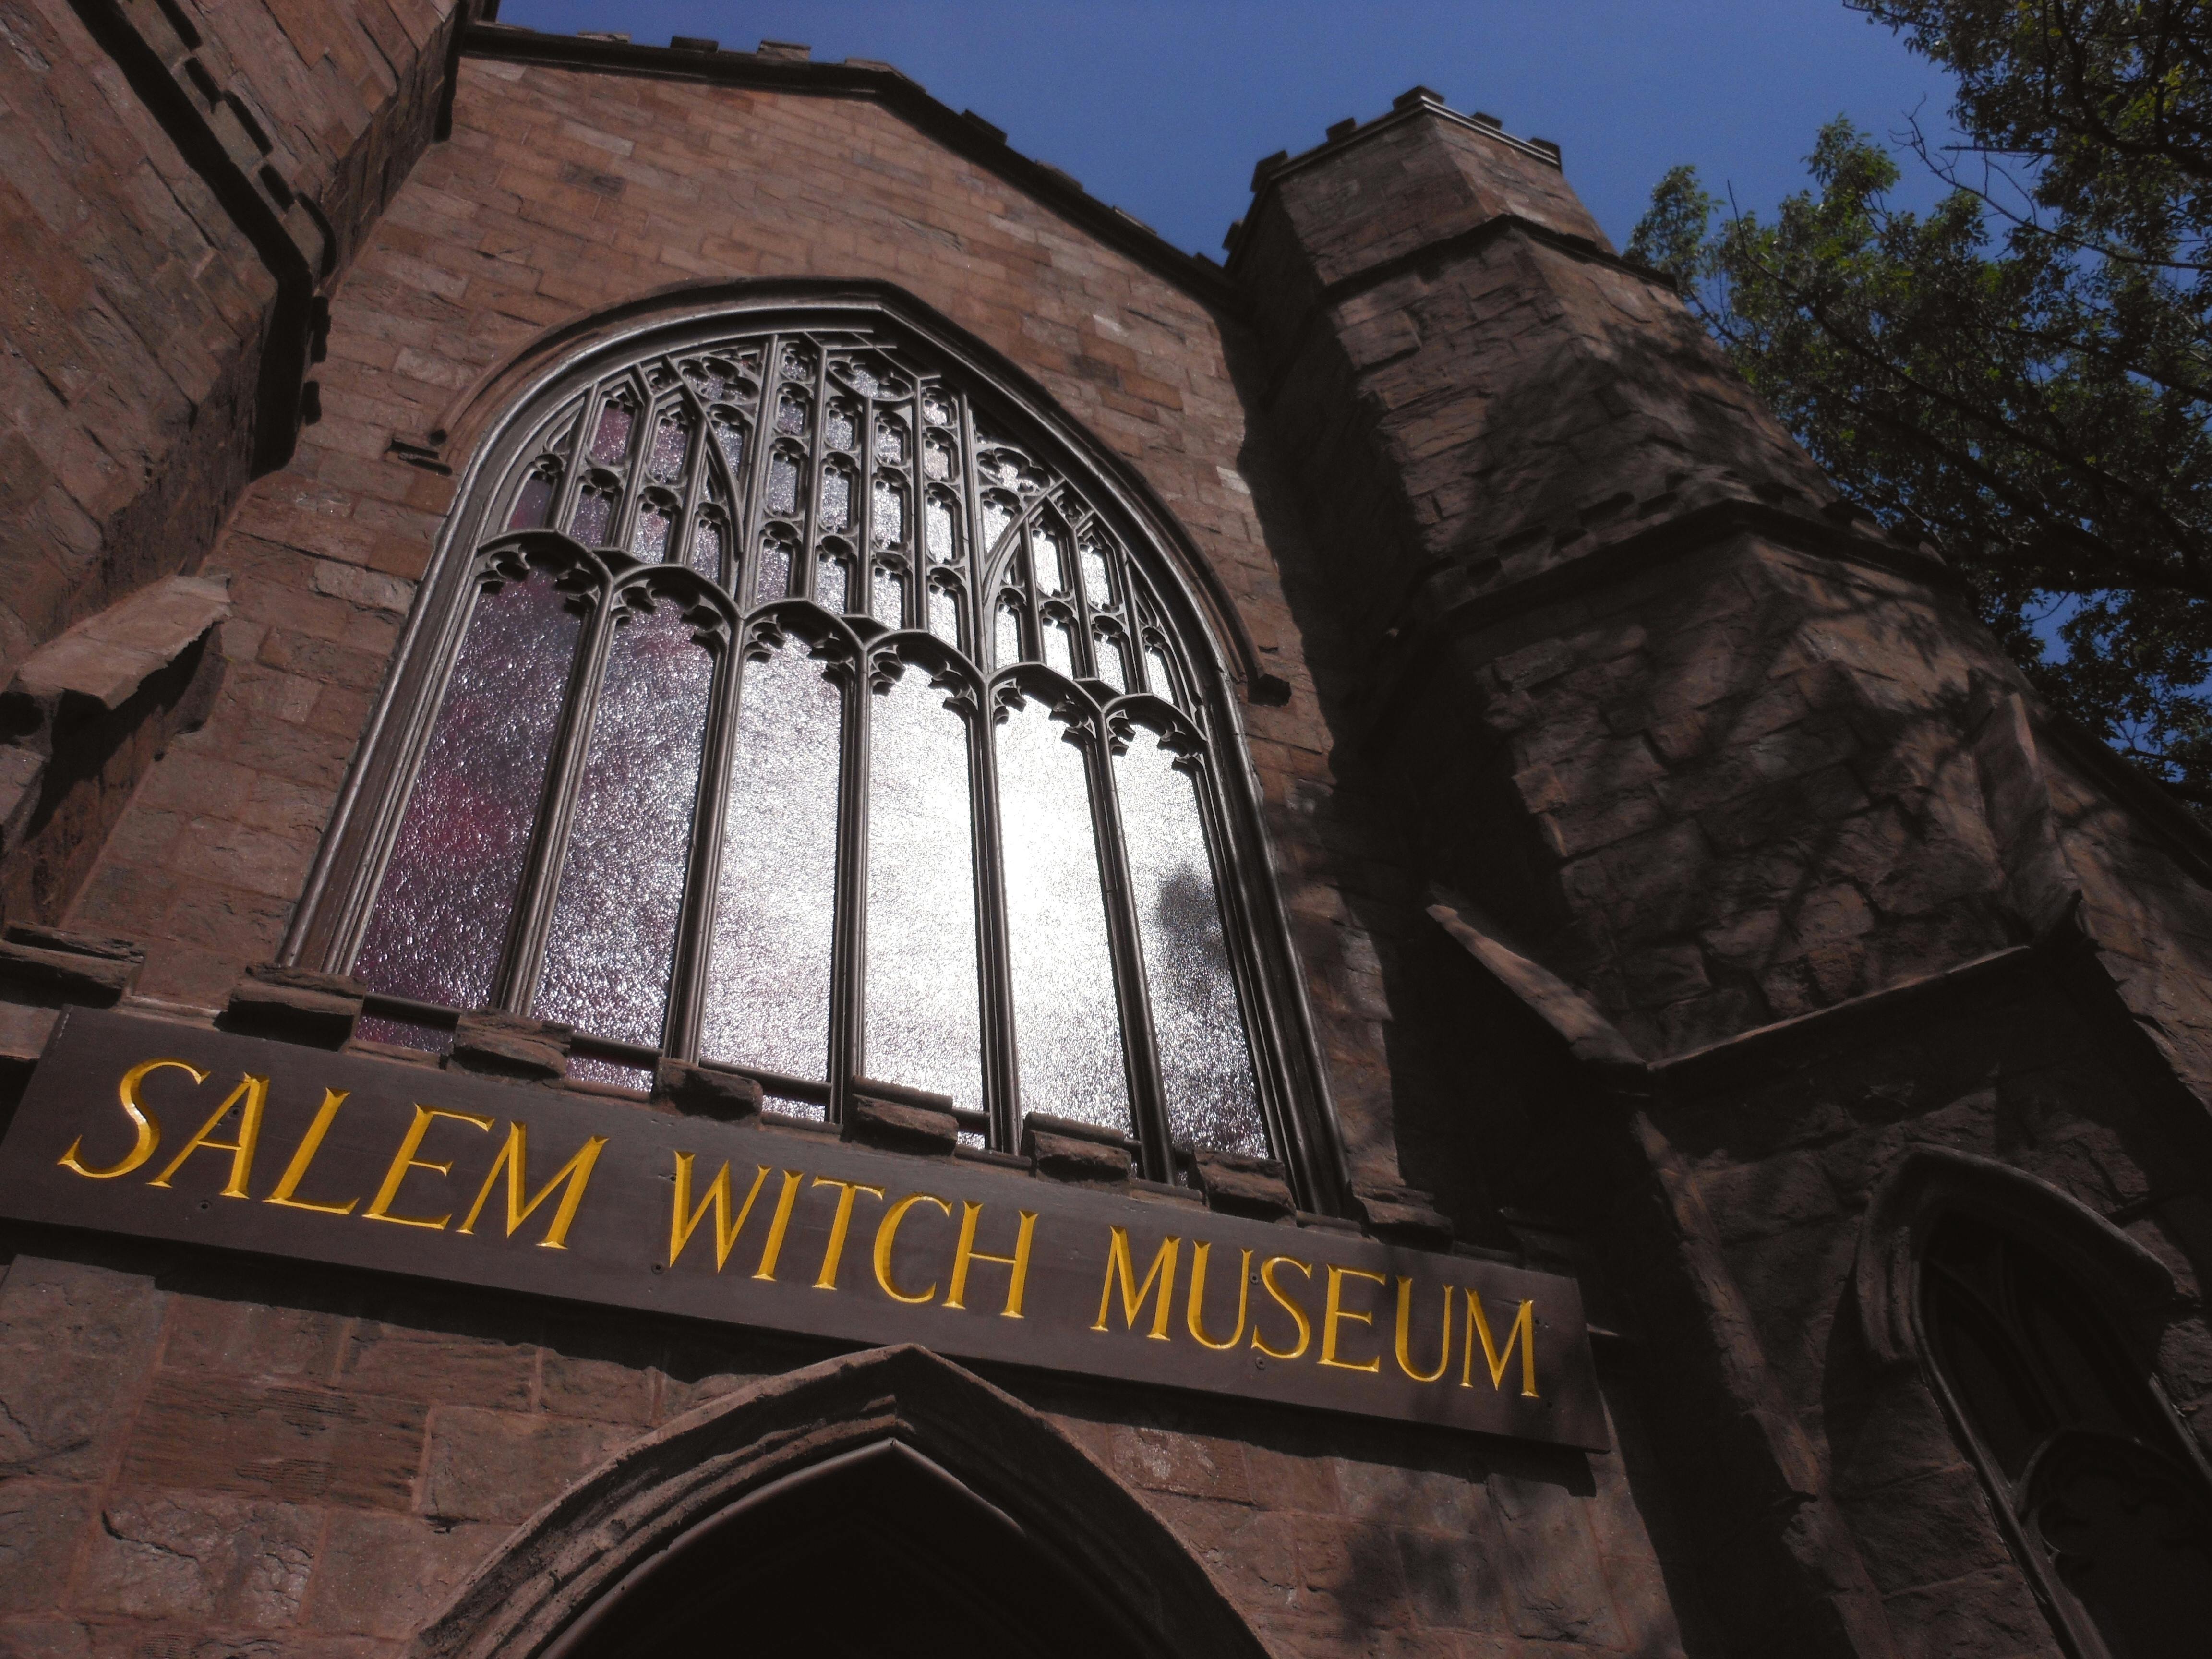 Salem Witch Museum.jpg